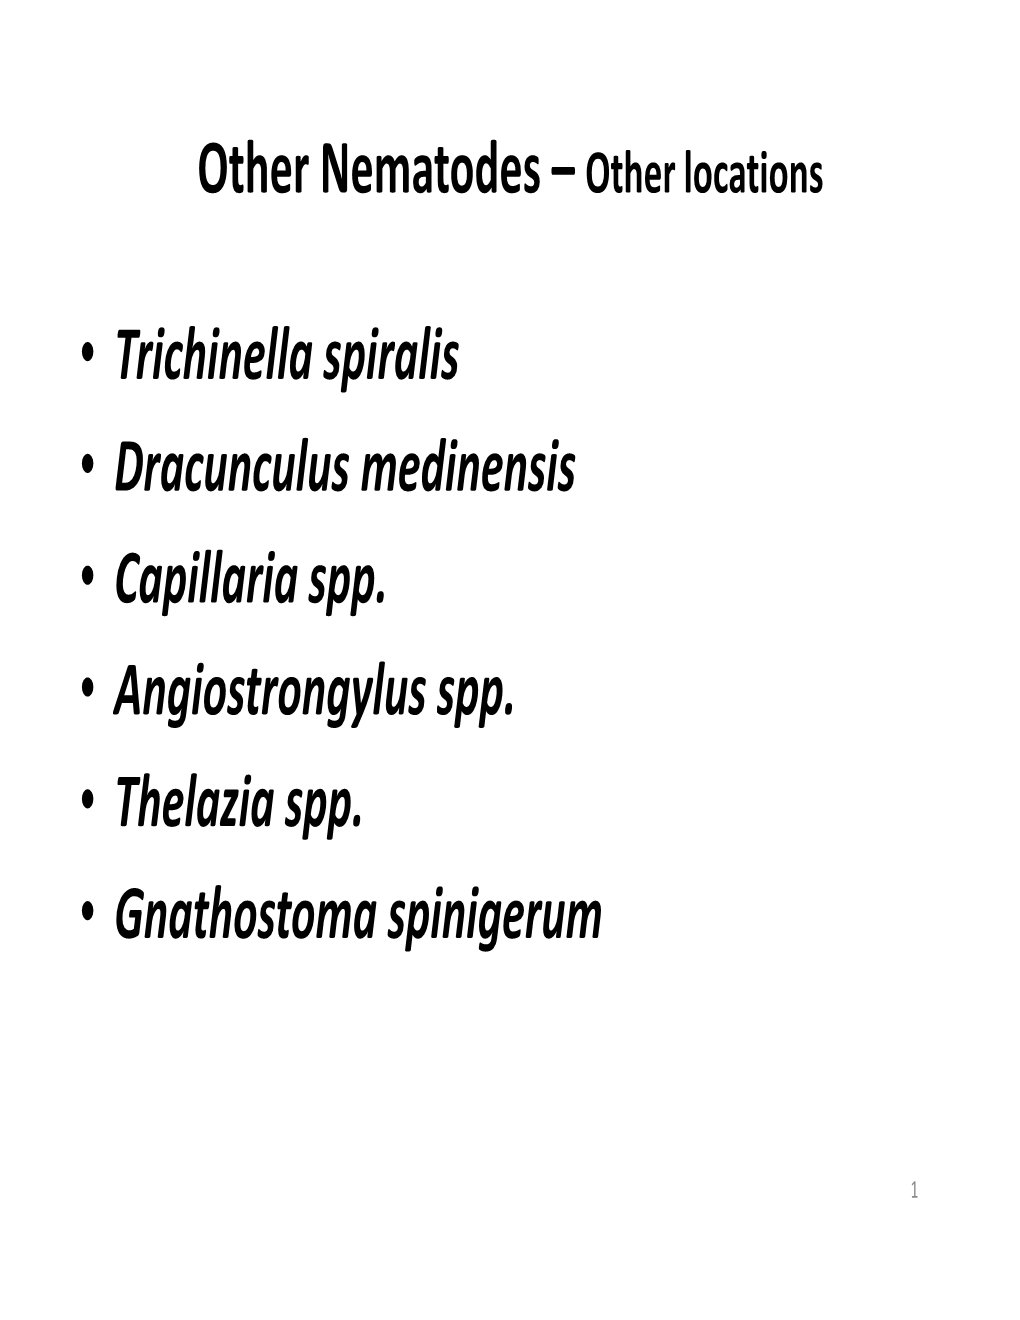 Other Locations • Trichinella Spiralis • Dracunculus Medinensis